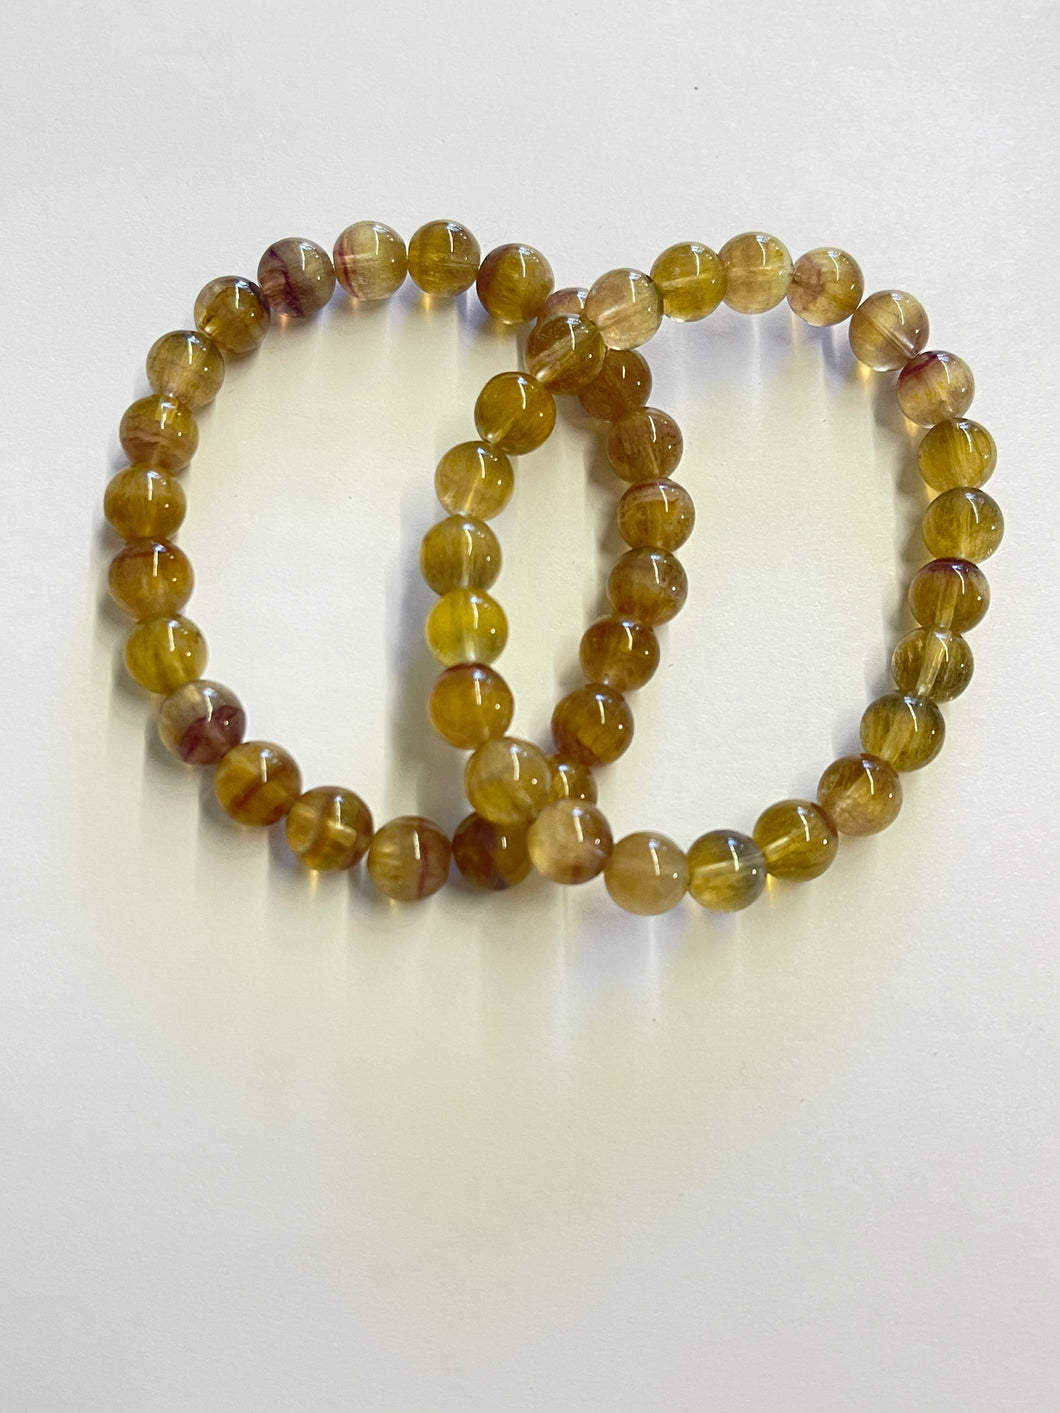 Bracelet with yellow fluorite beads